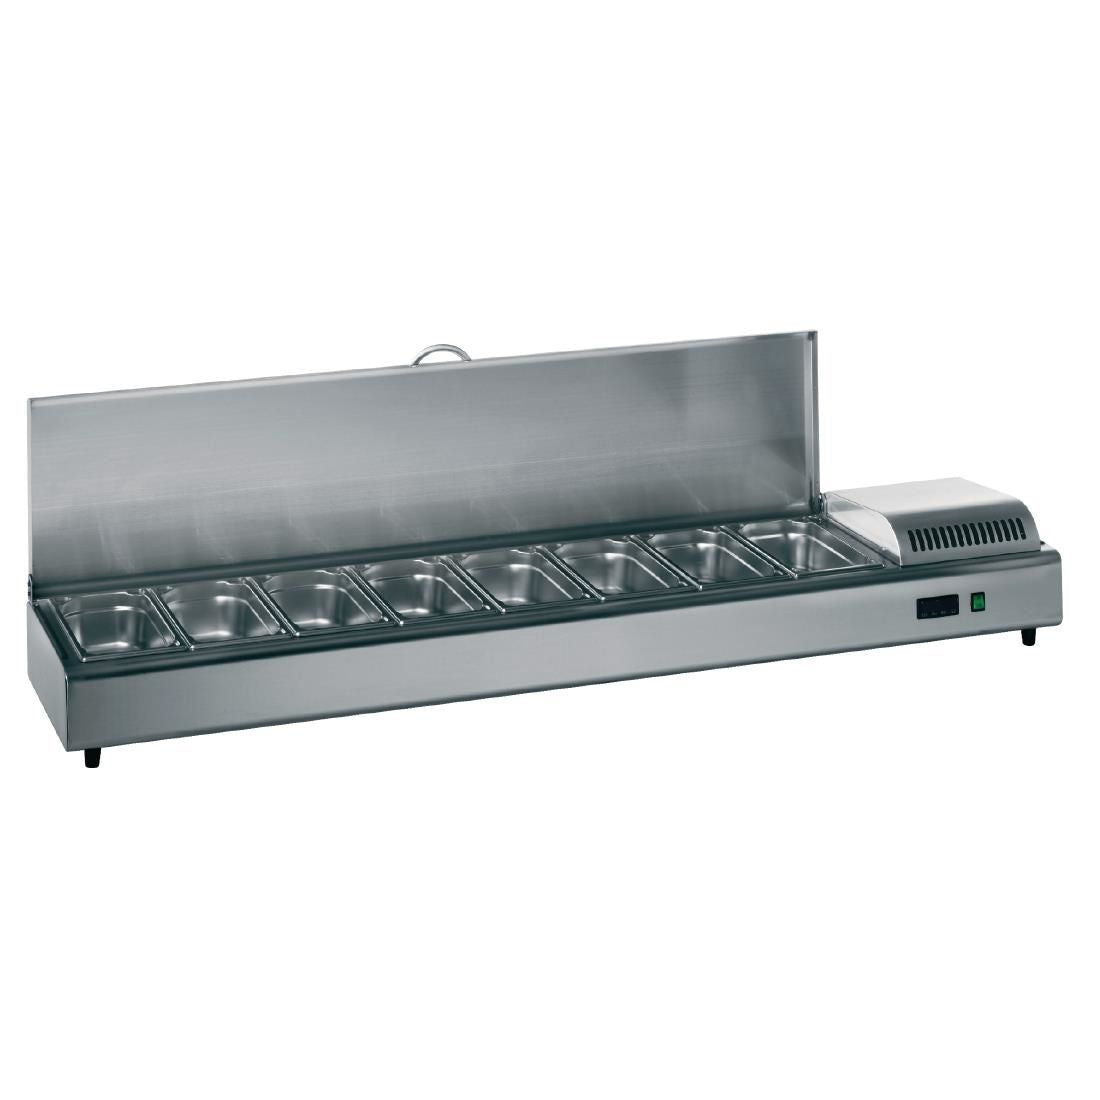 FDB8 - Lincat Seal Counter-top Food Display Bar - Refrigerated - W 1753 mm - 0.175 kW JD Catering Equipment Solutions Ltd